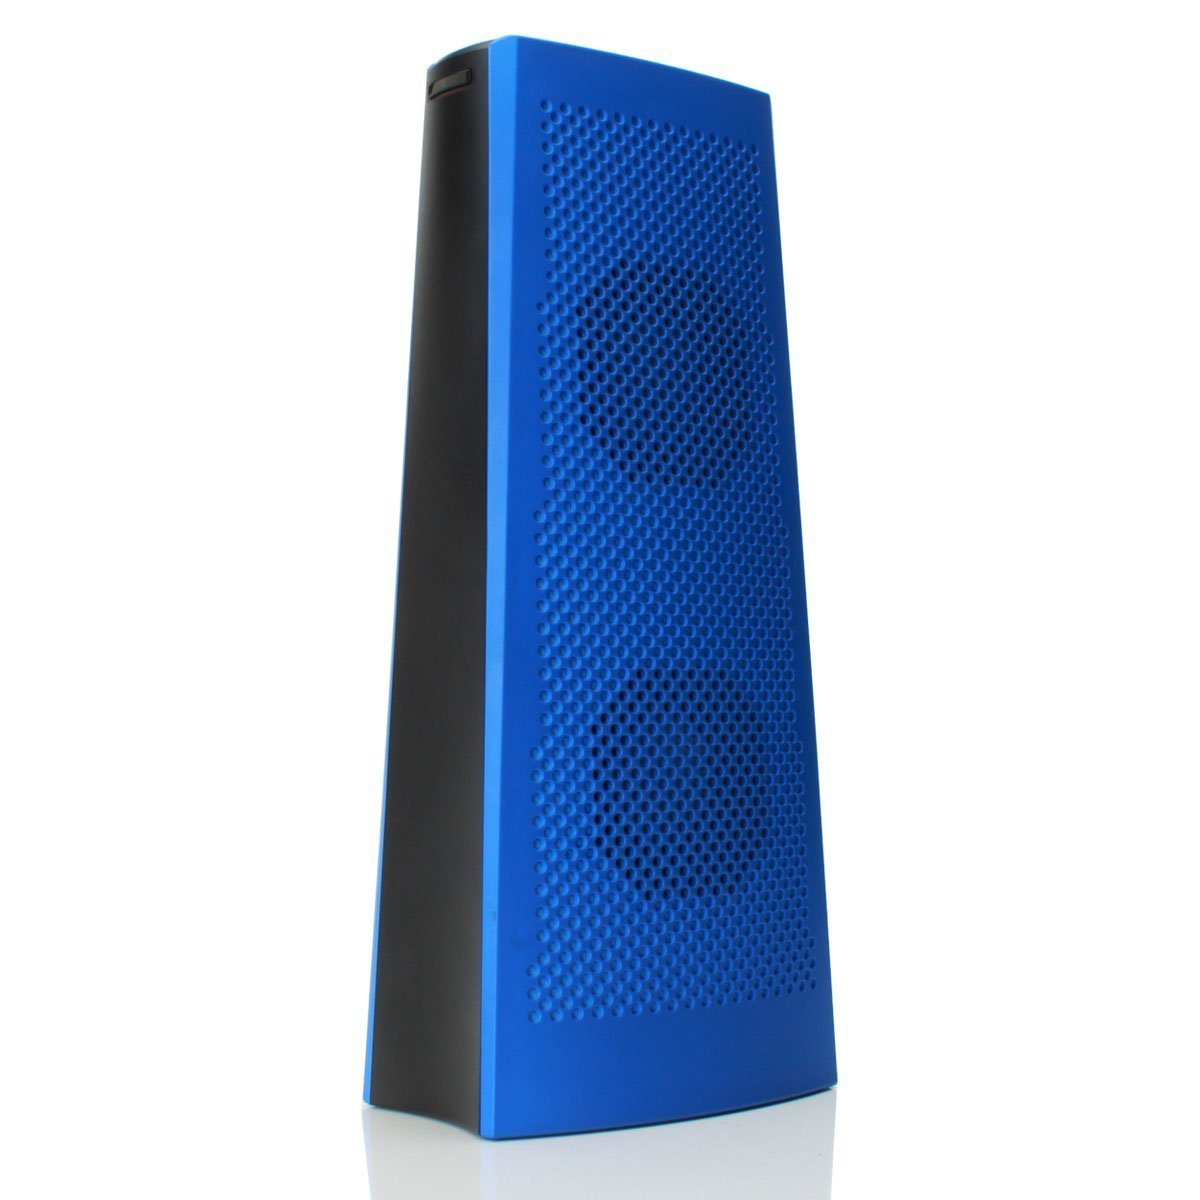 Altavoz Bluetooth Inalámbrico Portátil por 8,99 €